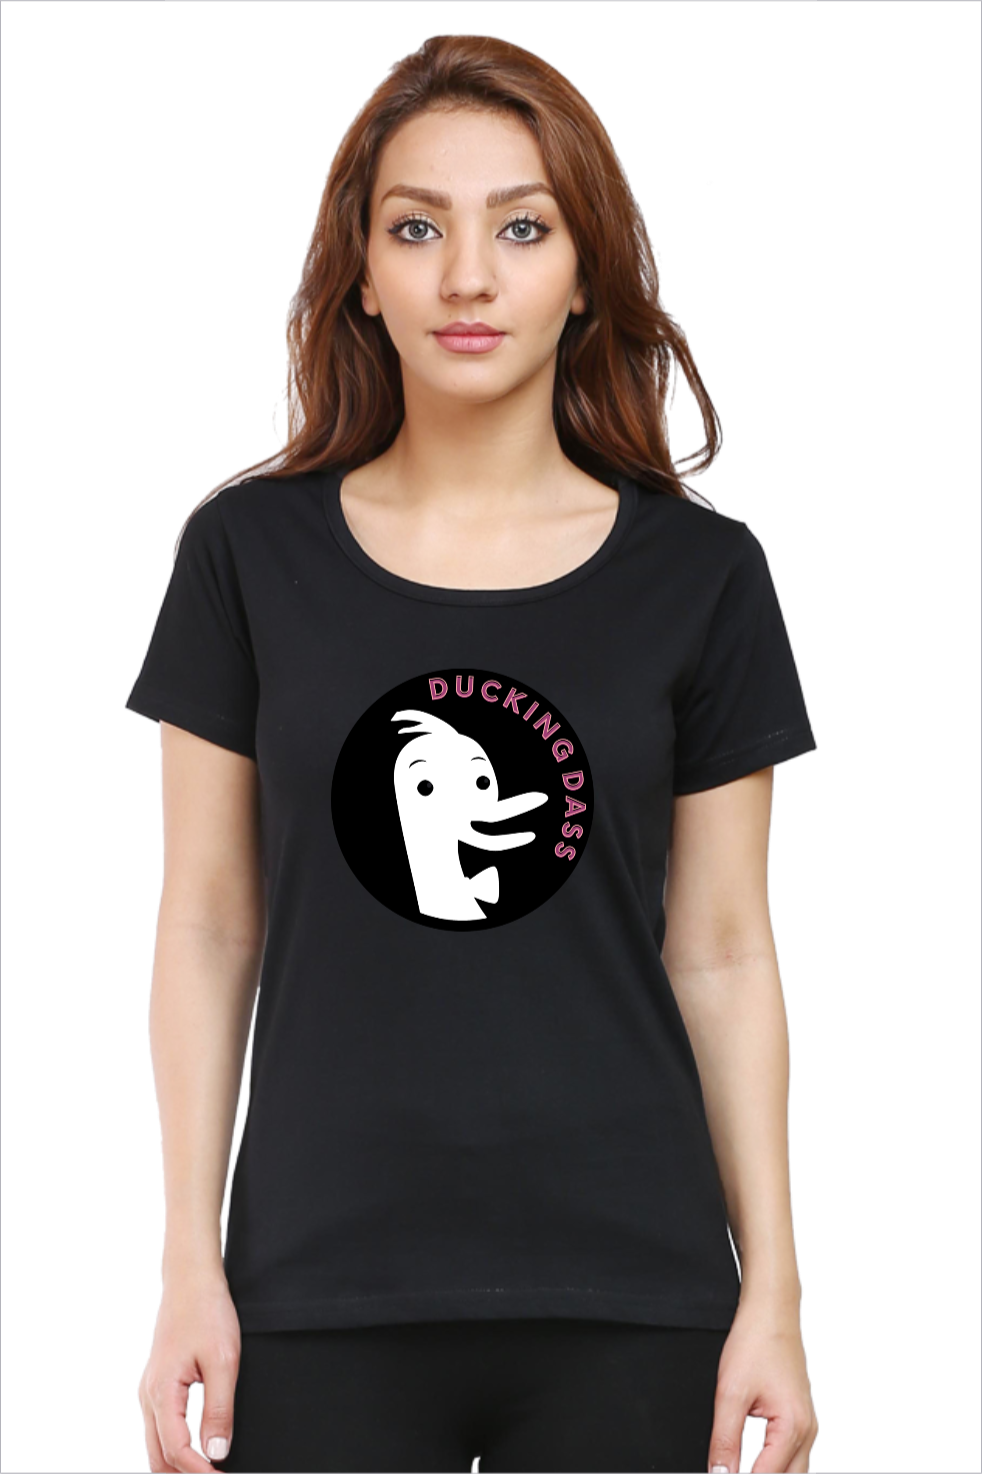 Women's Ducking Dass Black Half Sleeve T-shirt